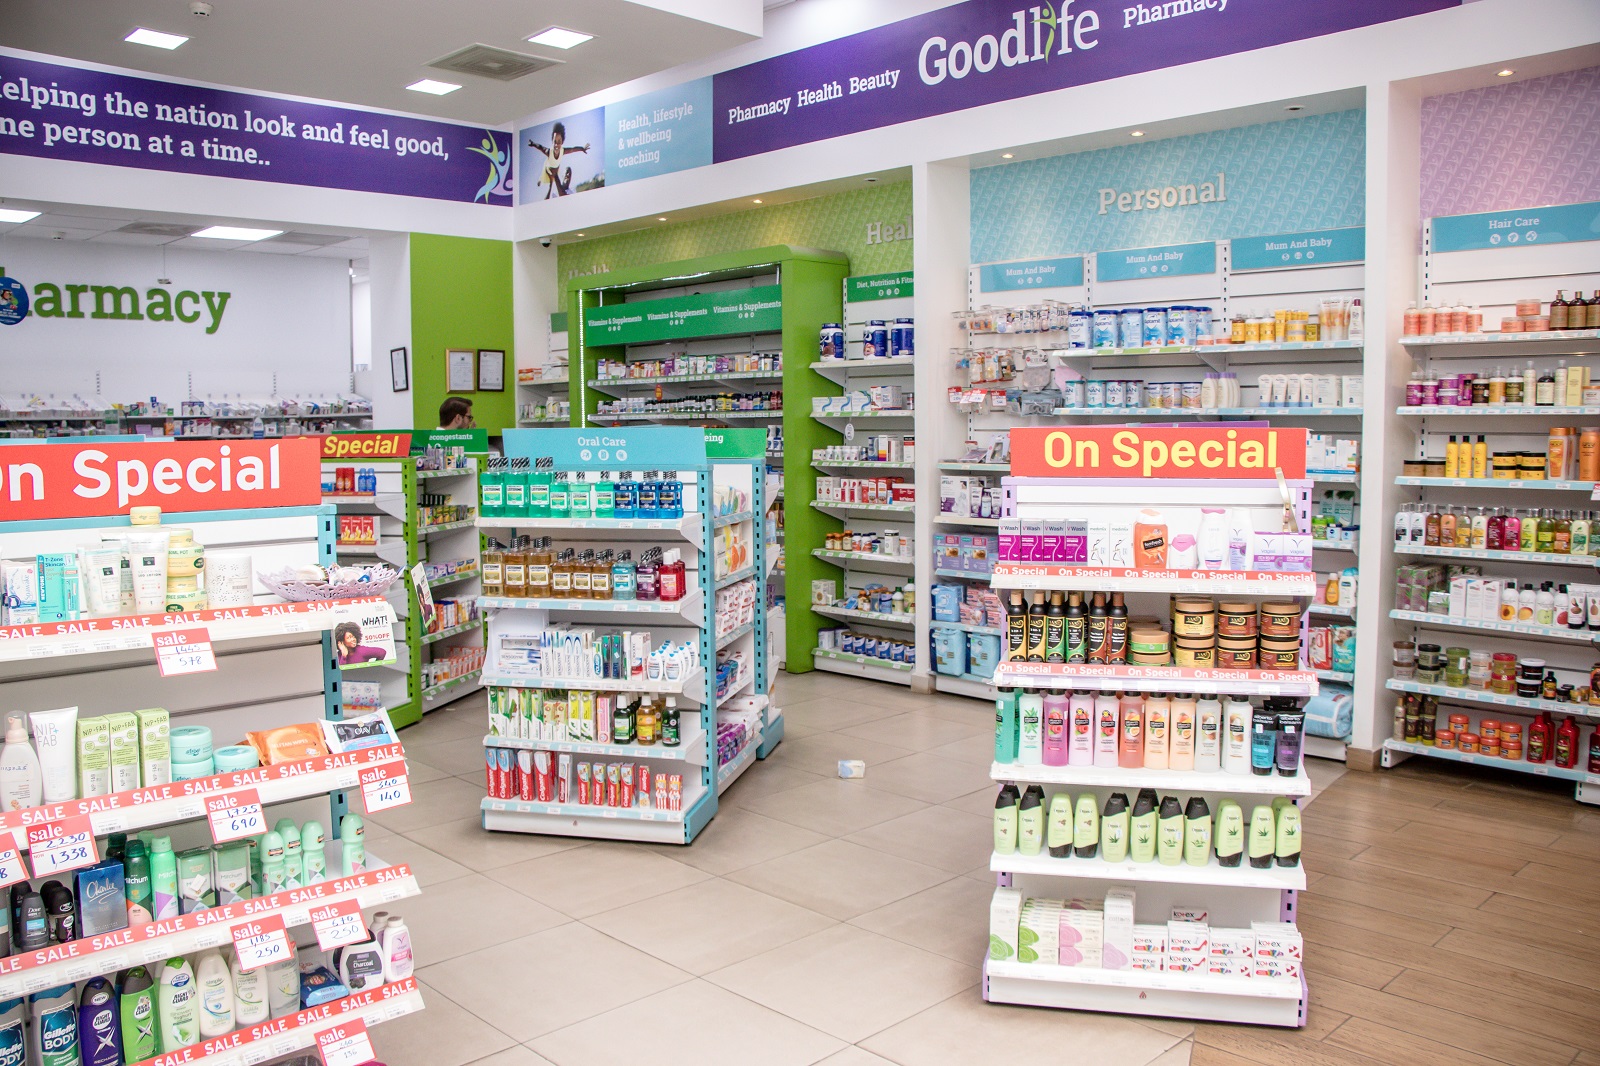 Goodlife Pharmacy